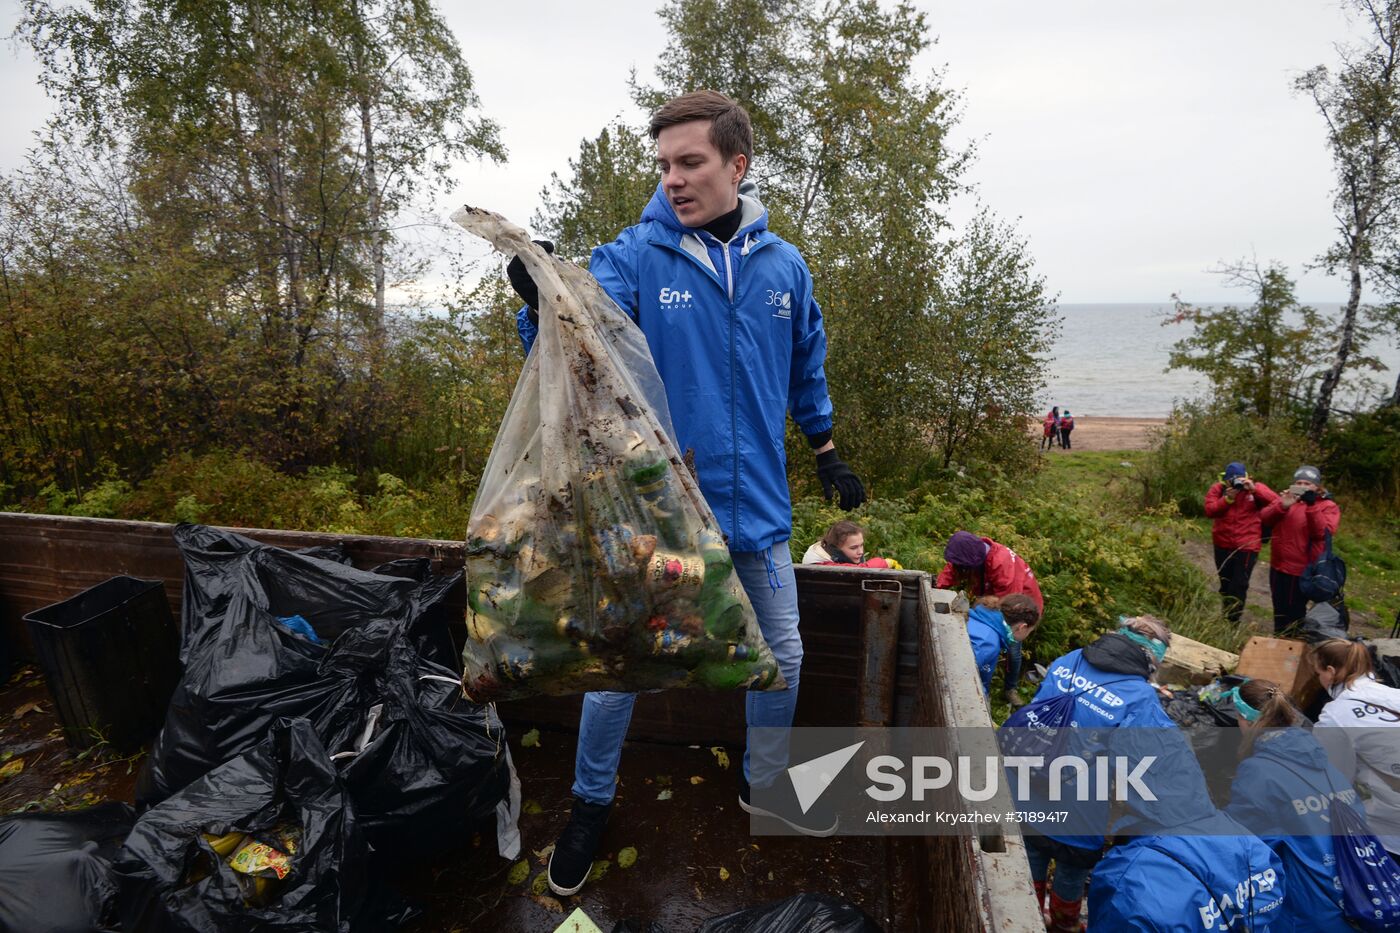 Garbage removal at Lake Baikal's water area and shores